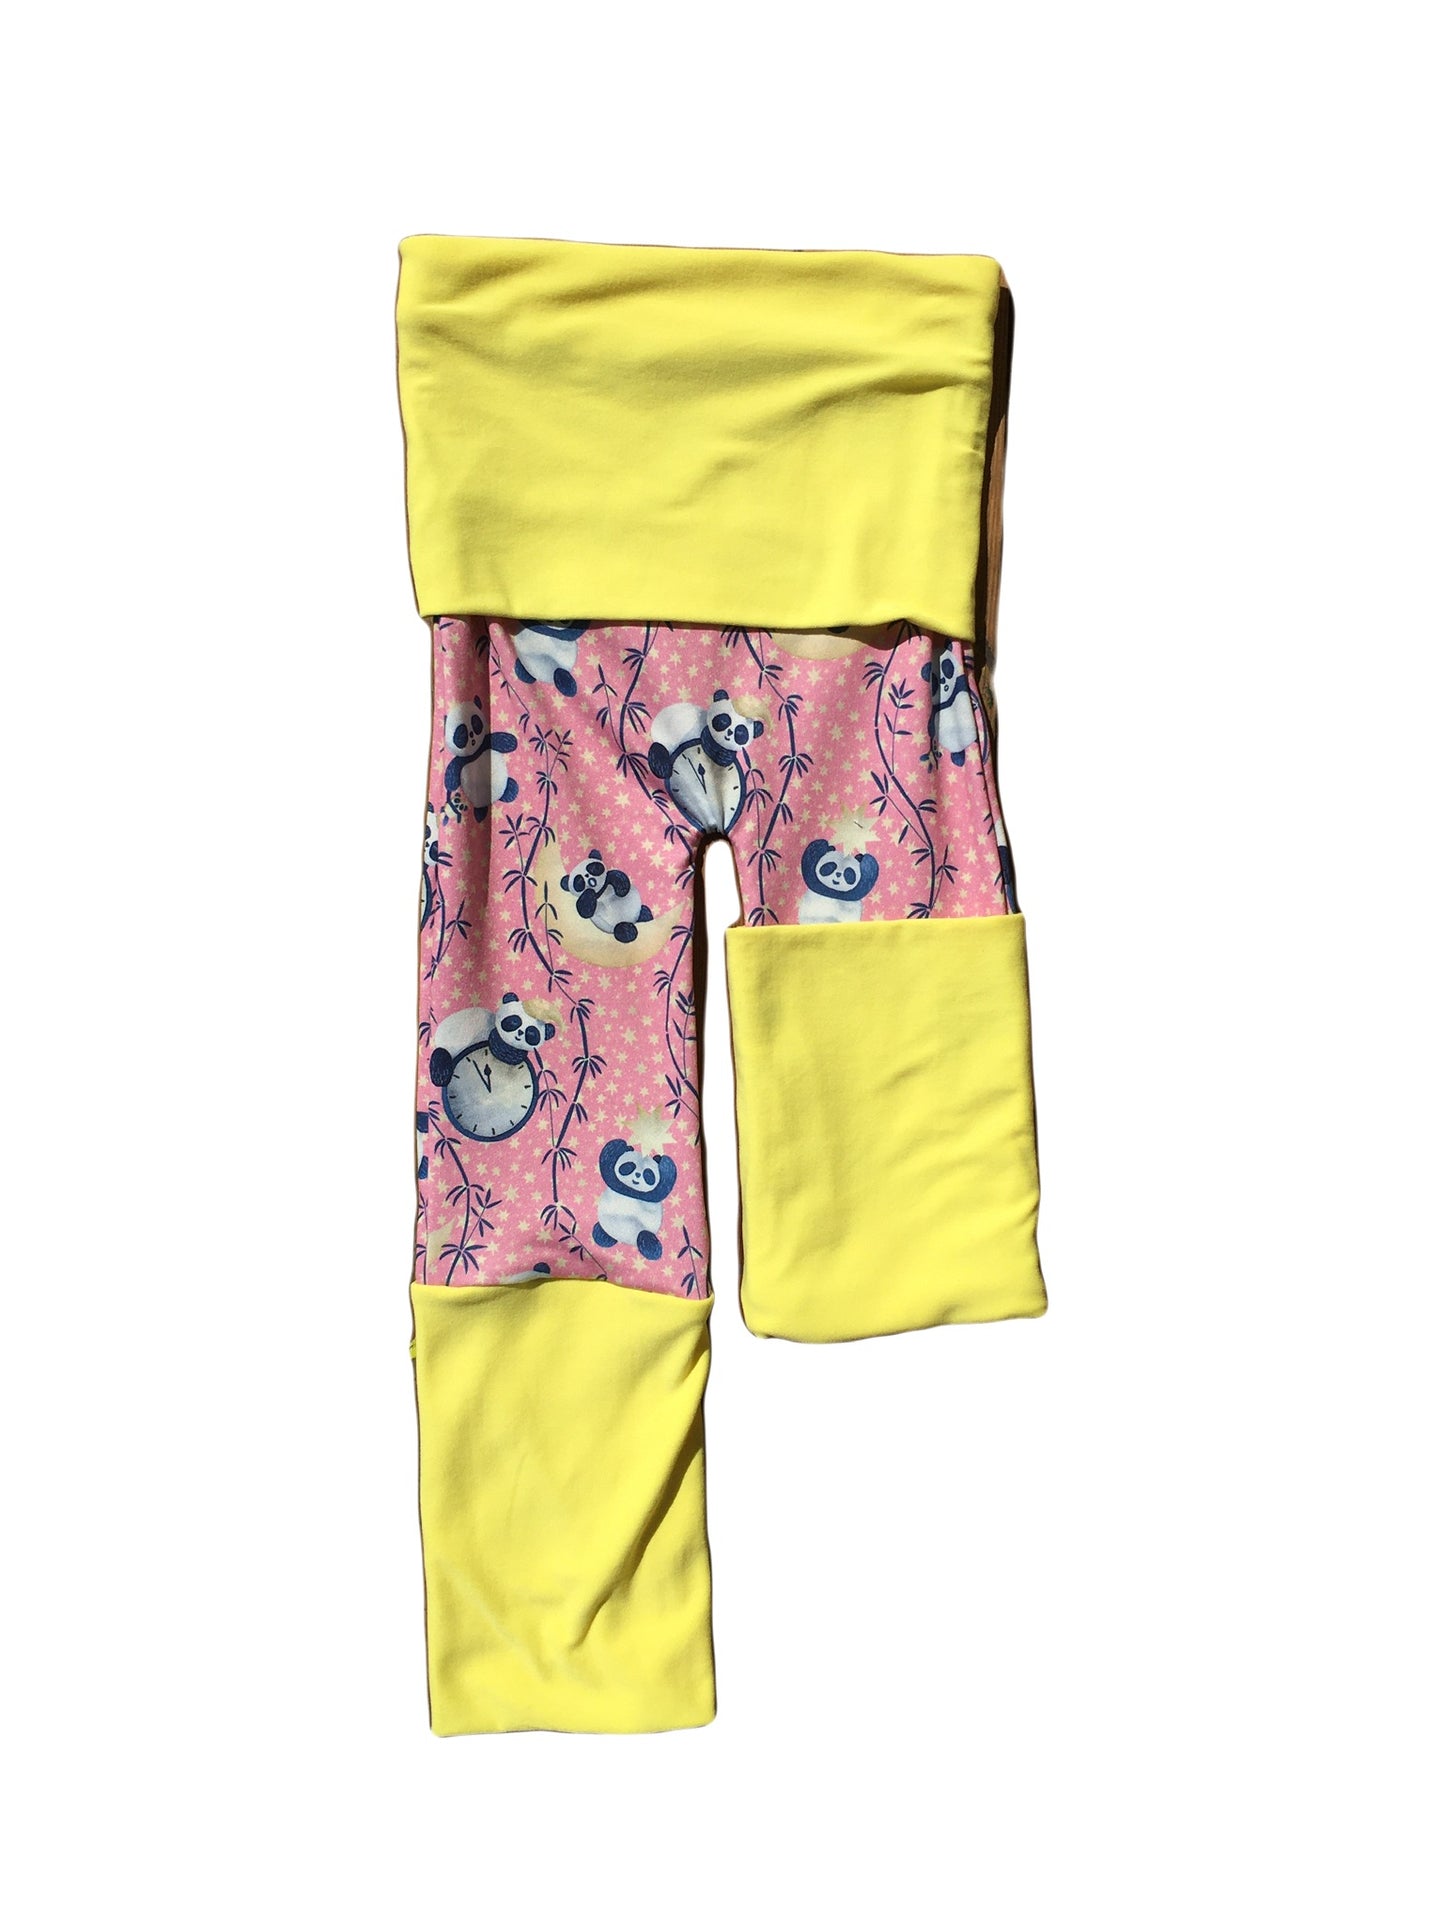 Adjustable Pants - Pink Panda with Yellow